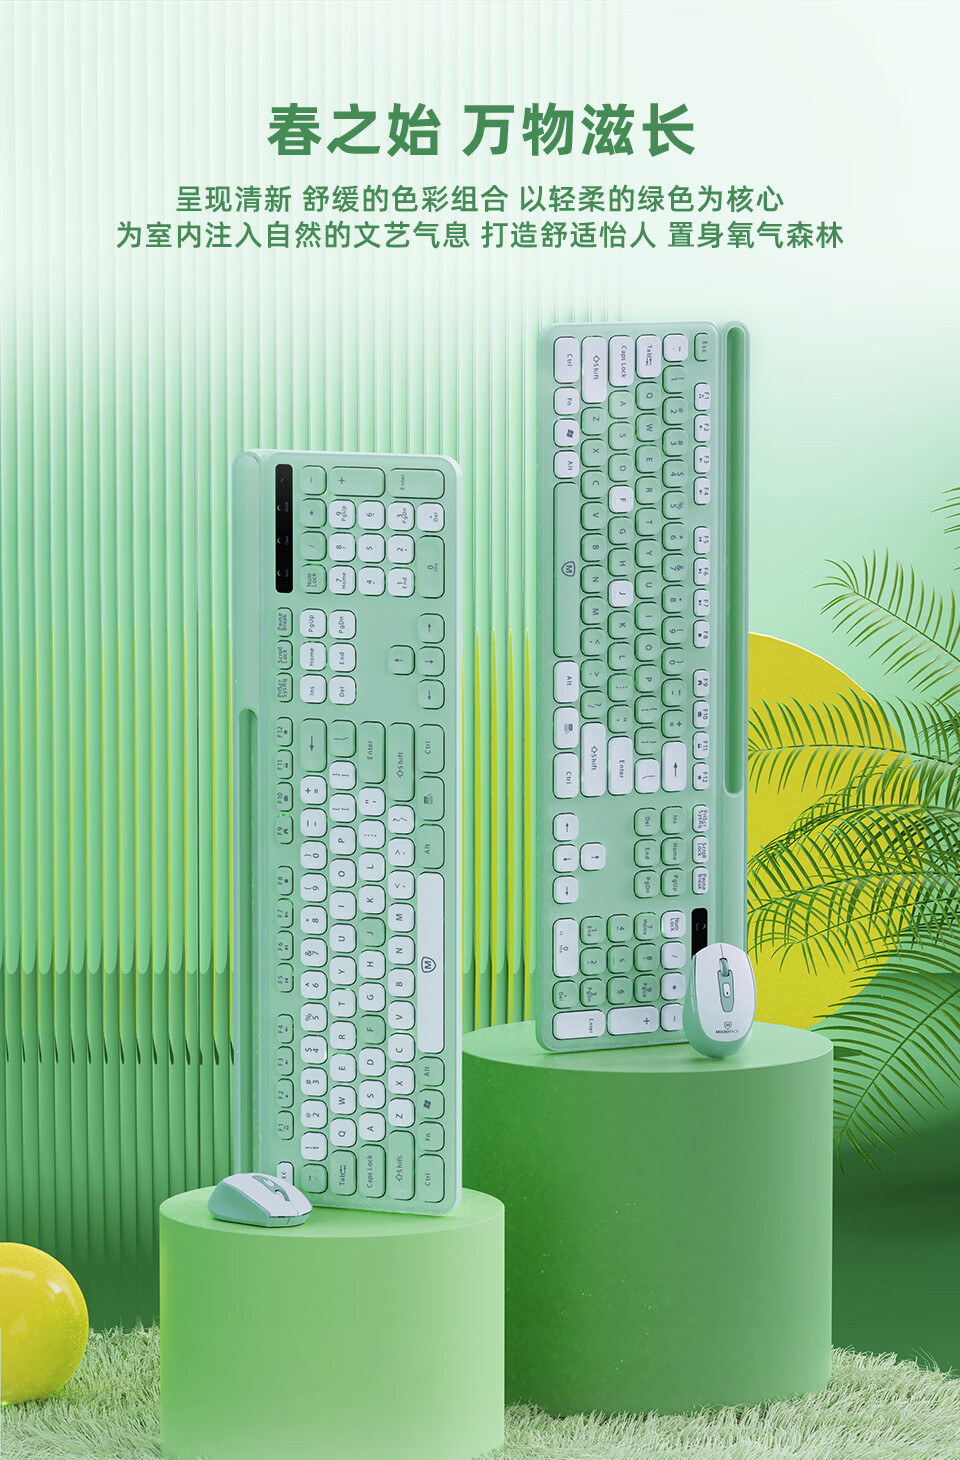 MiCRPACK 迈可派克 无线键鼠套装 无线键盘 键盘无线 静音键盘 办公键盘 【小绿马】